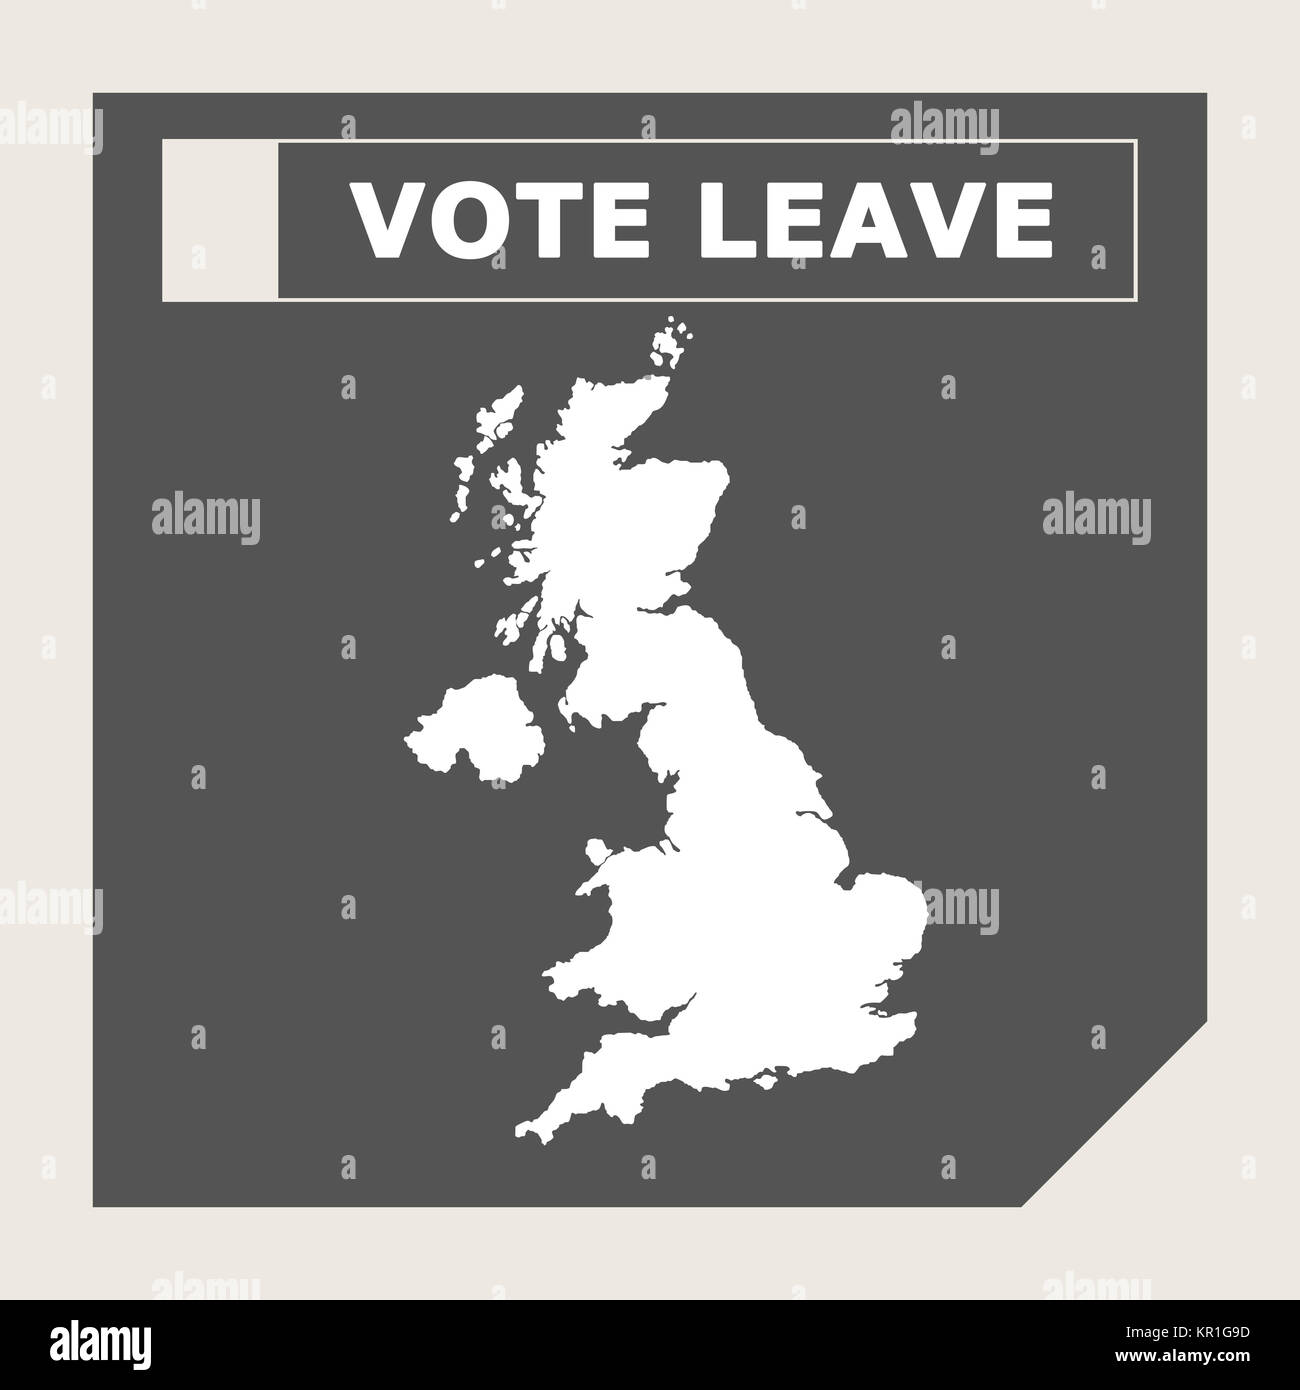 Reino Unido votar dejar icon Foto de stock